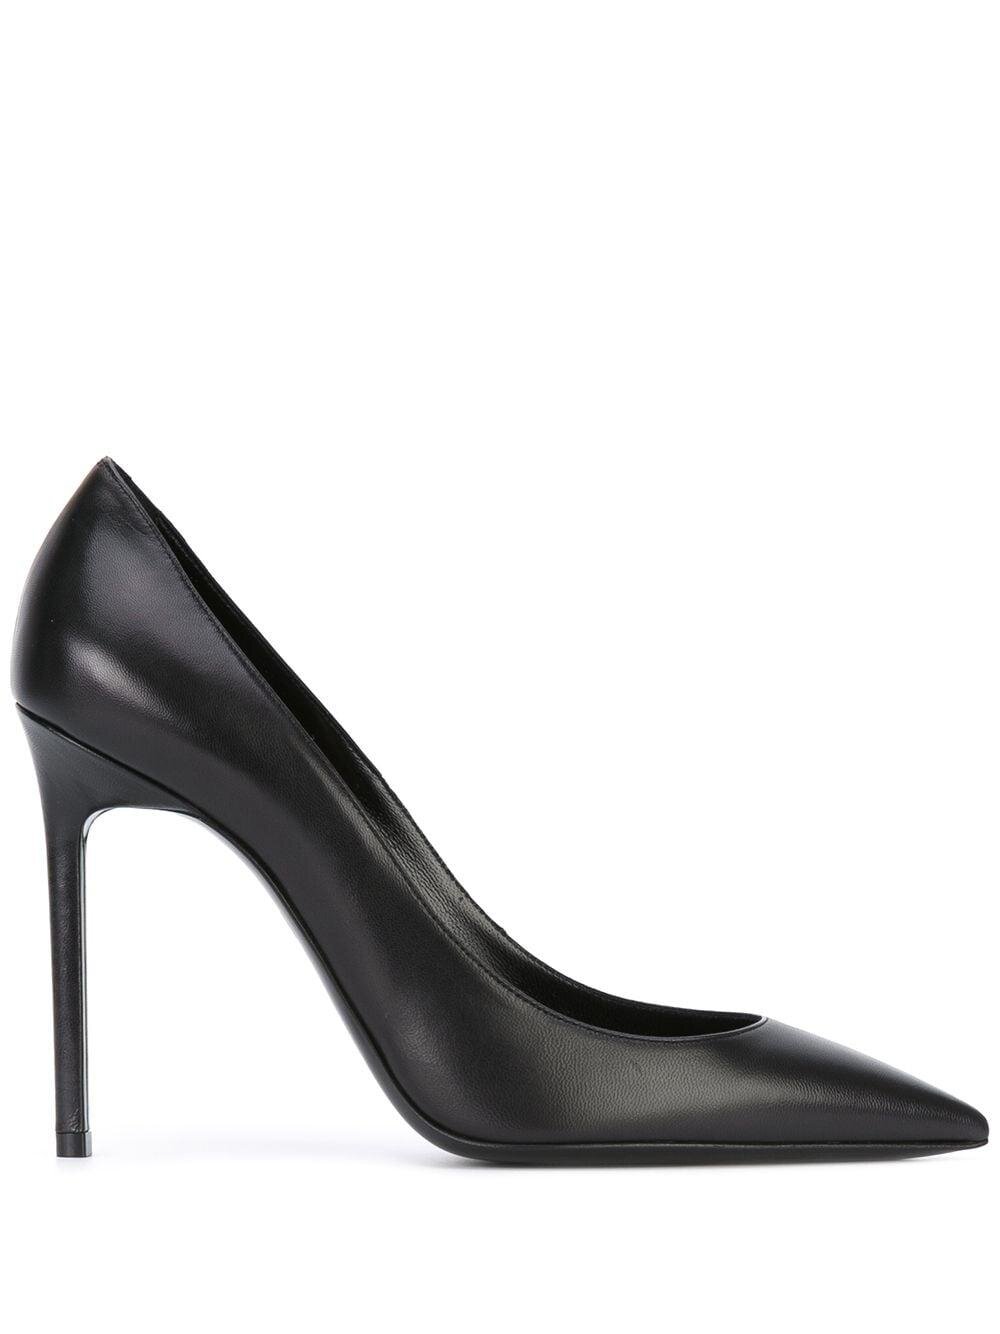 Saint Laurent Anja 105 Court Shoes in Black.jpg